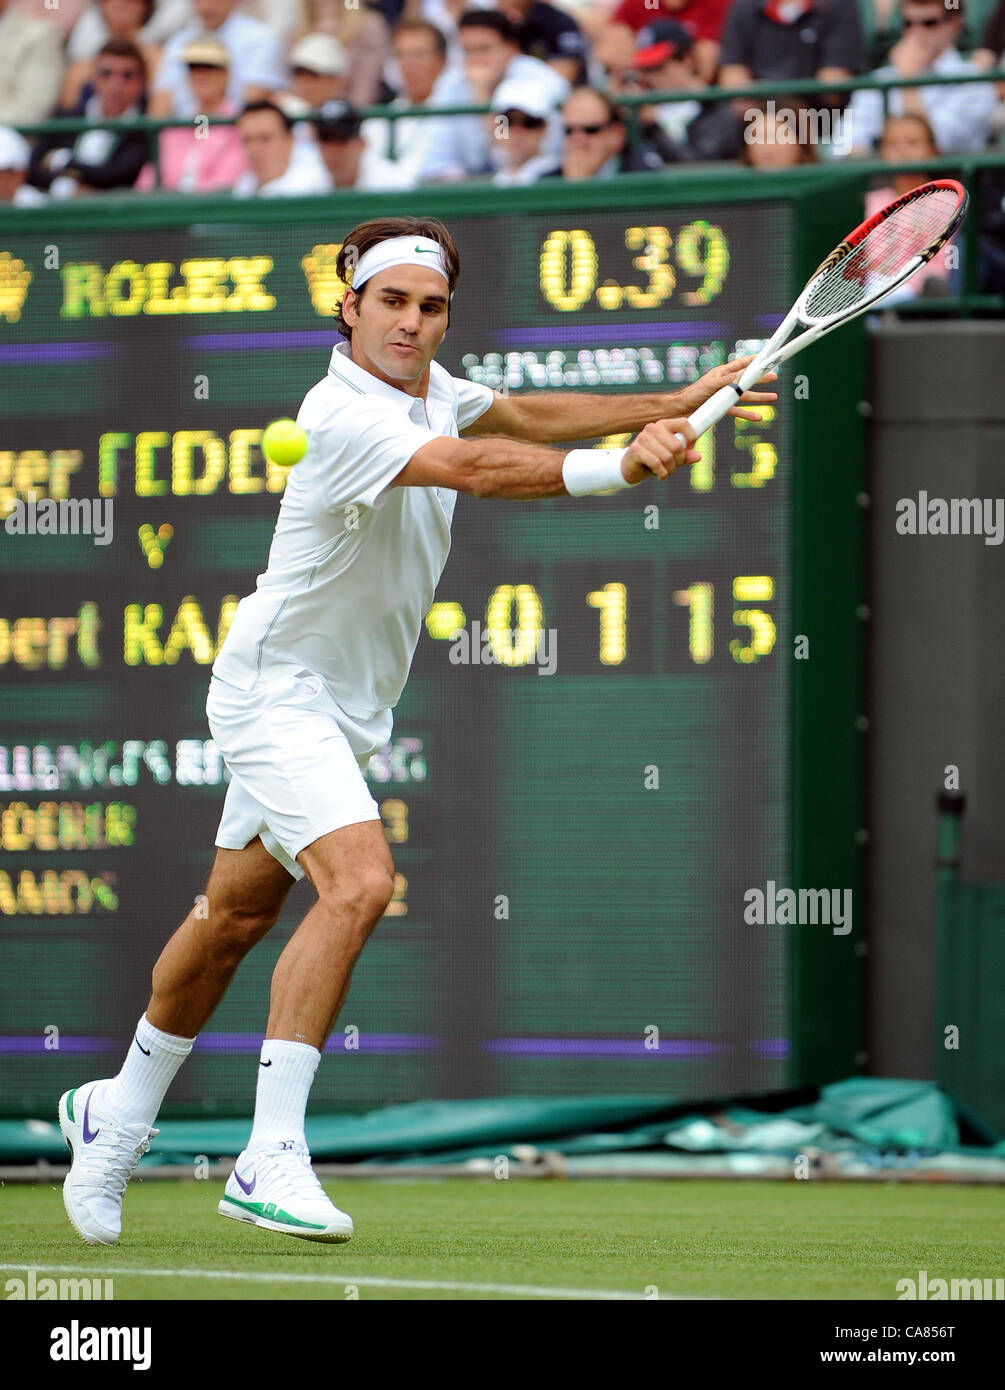 ROGER Federer svizzera All England Tennis Club Wimbledon Londra Inghilterra 25 Giugno 2012 Foto Stock